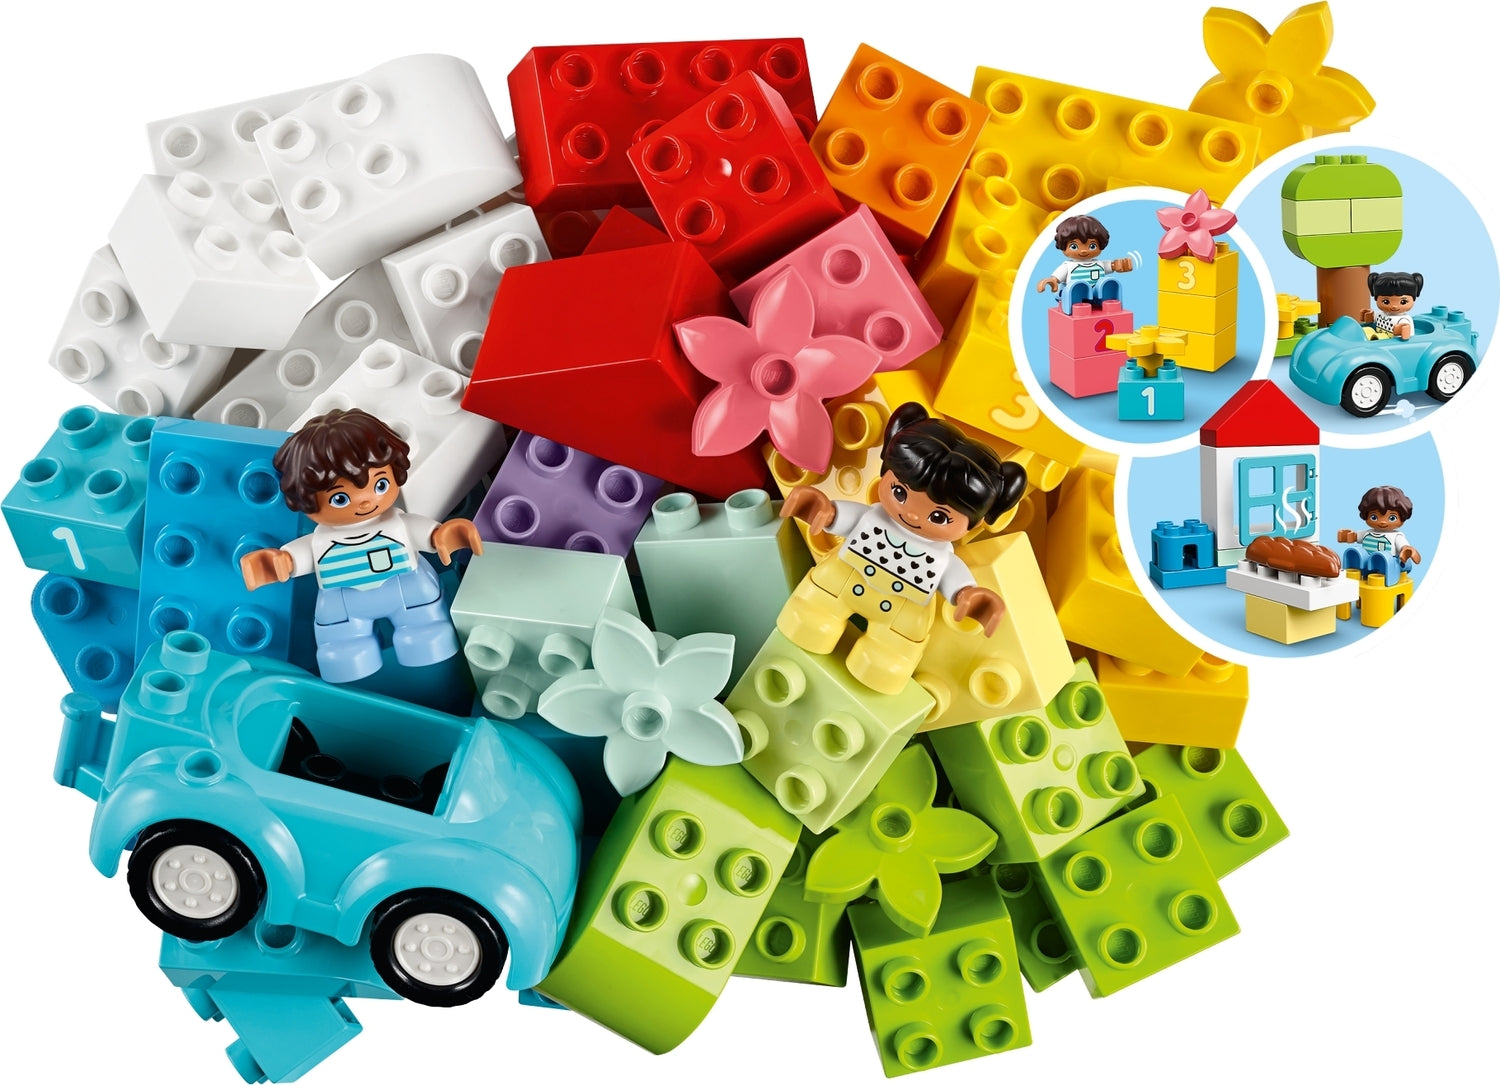 LEGO DUPLO: Brick Box